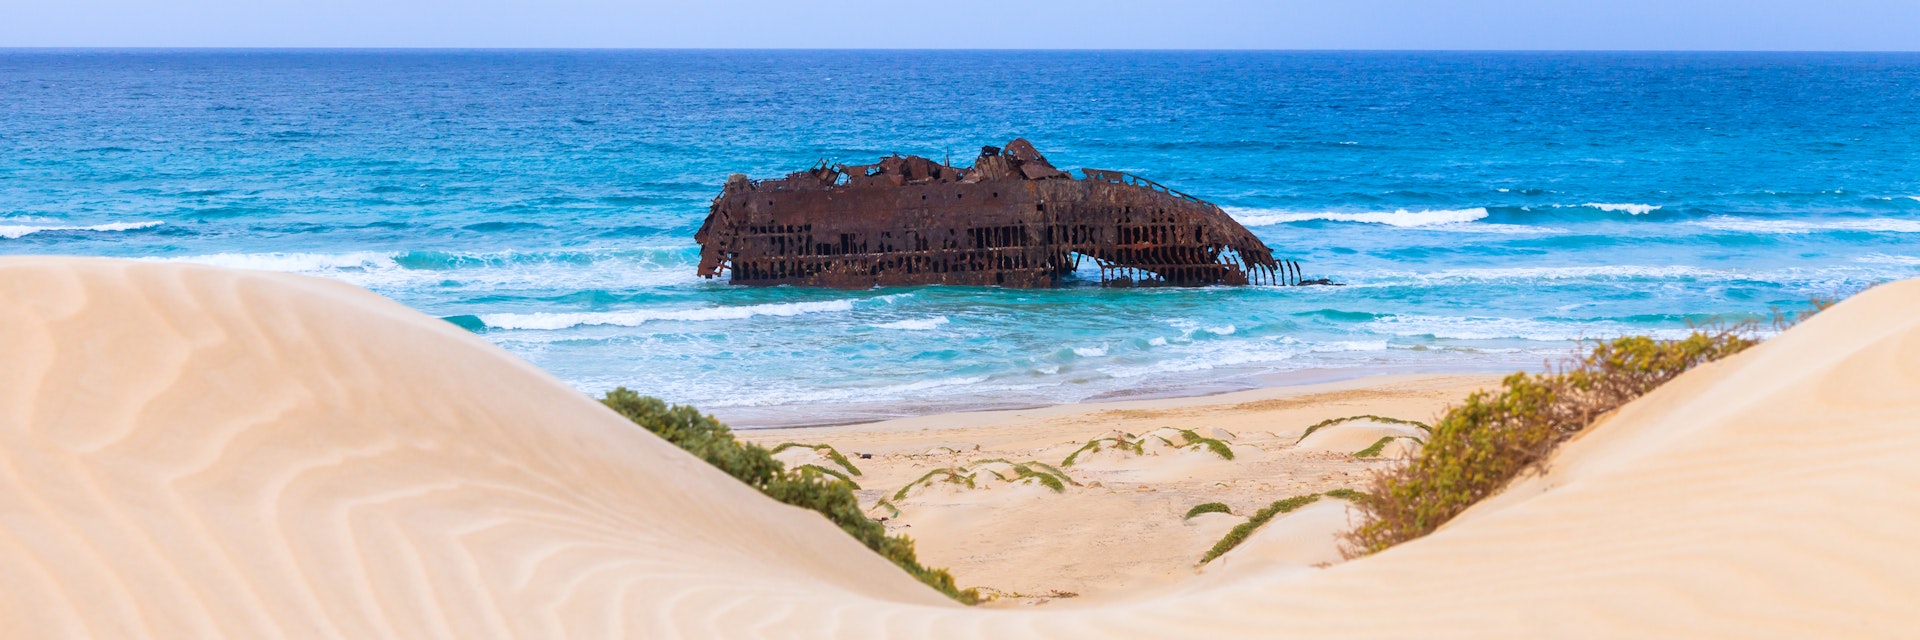 Wreck boat on the coast of boa vista in Cape Verde, Cabo Verde; Shutterstock ID 256852069; your: Erin Lenczycki; gl: 65050; netsuite: Online Editorial; full: Destination Update